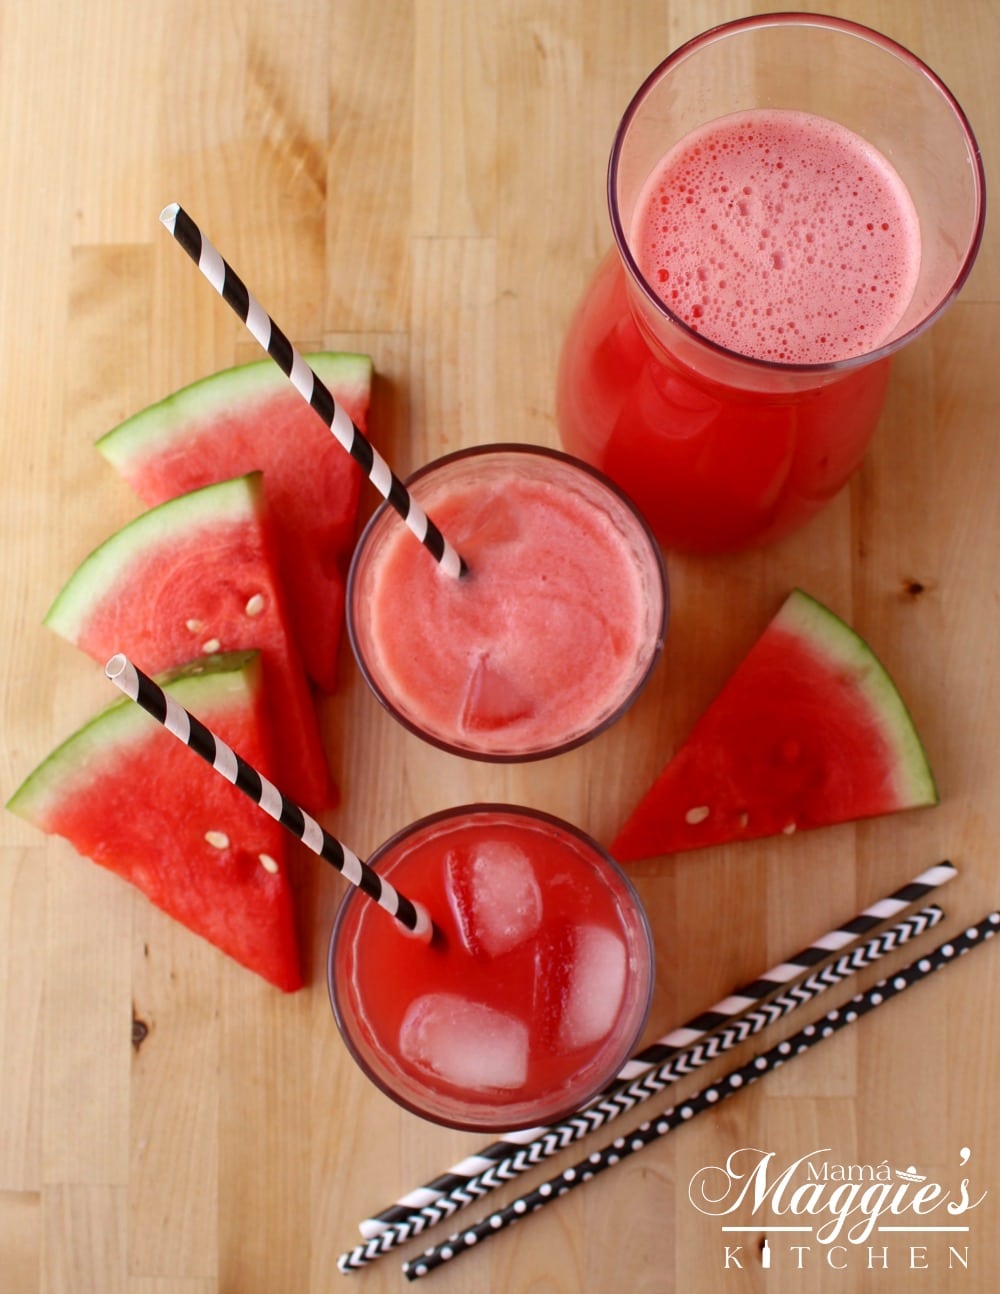 Watermelon agua fresca glasses next to watermelon slices and black and white straws.